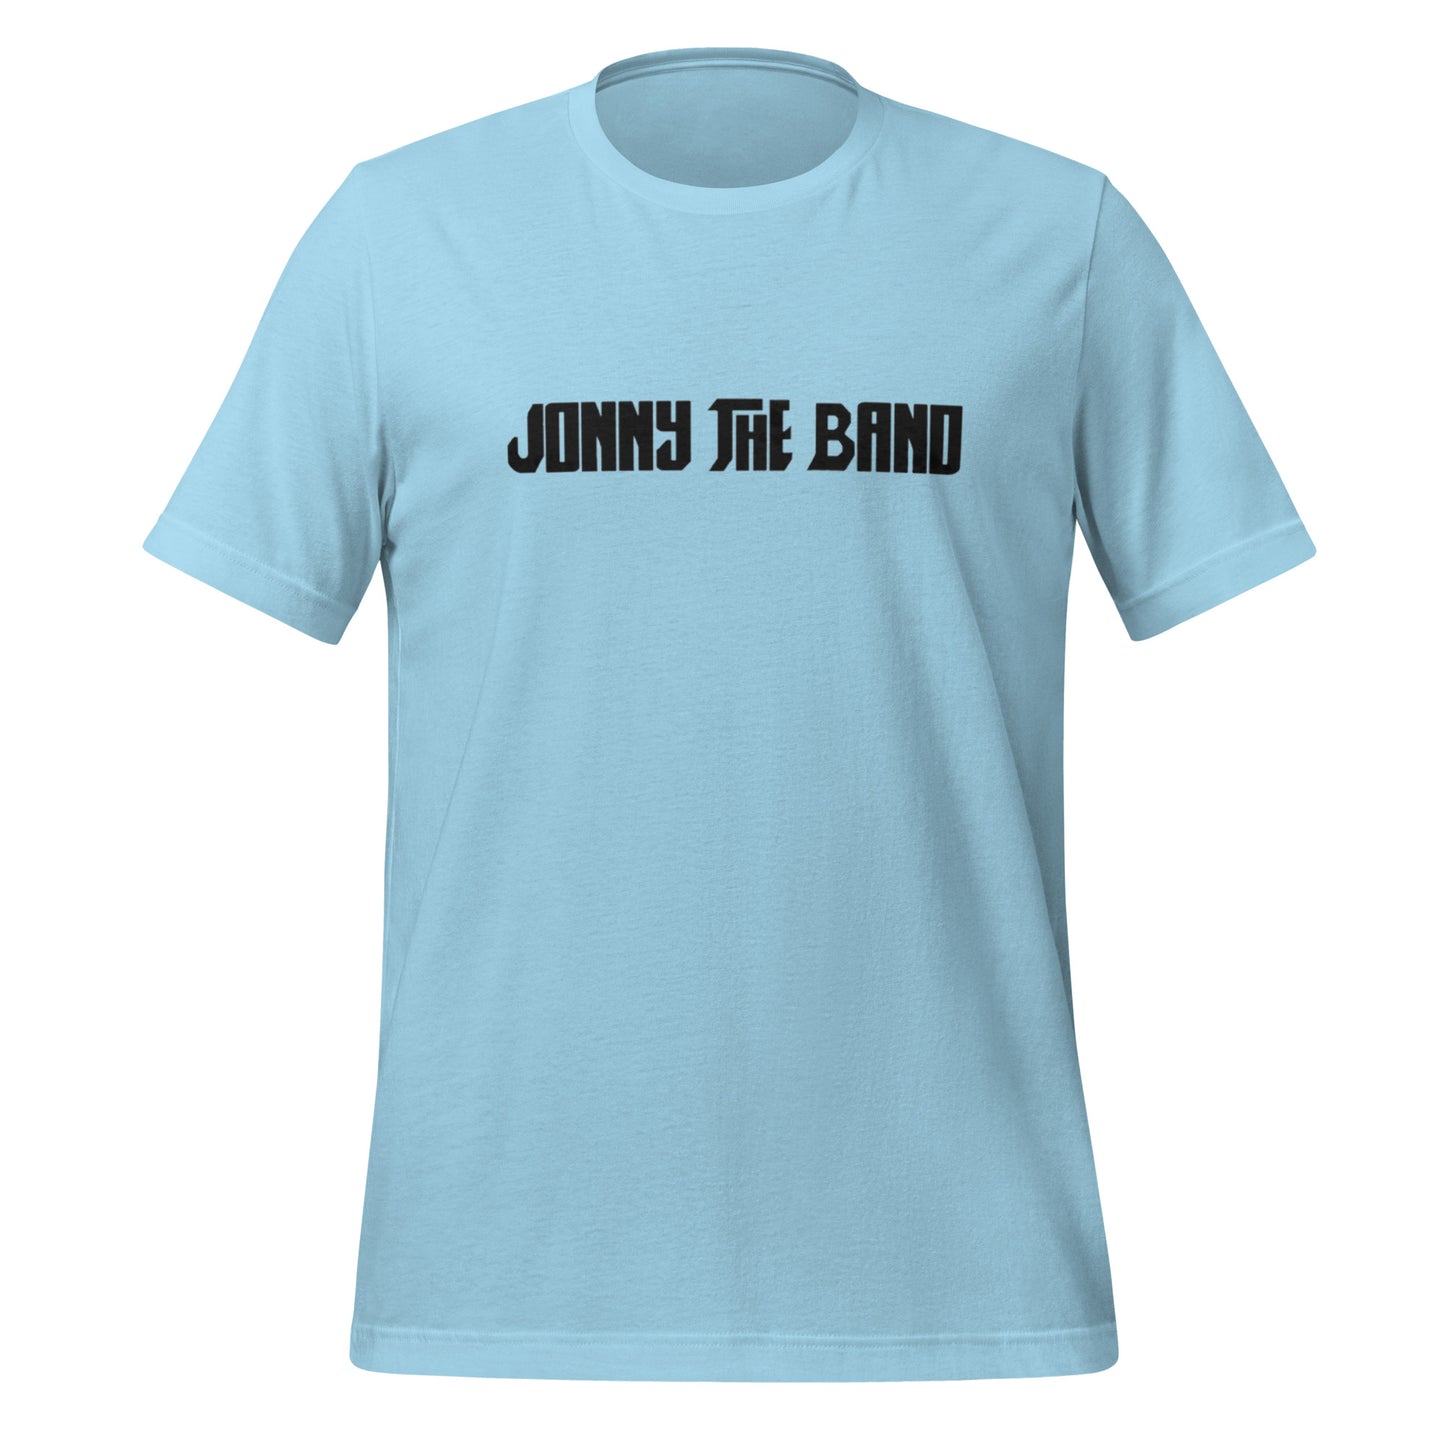 Jonny The Band - T-Shirt with Name